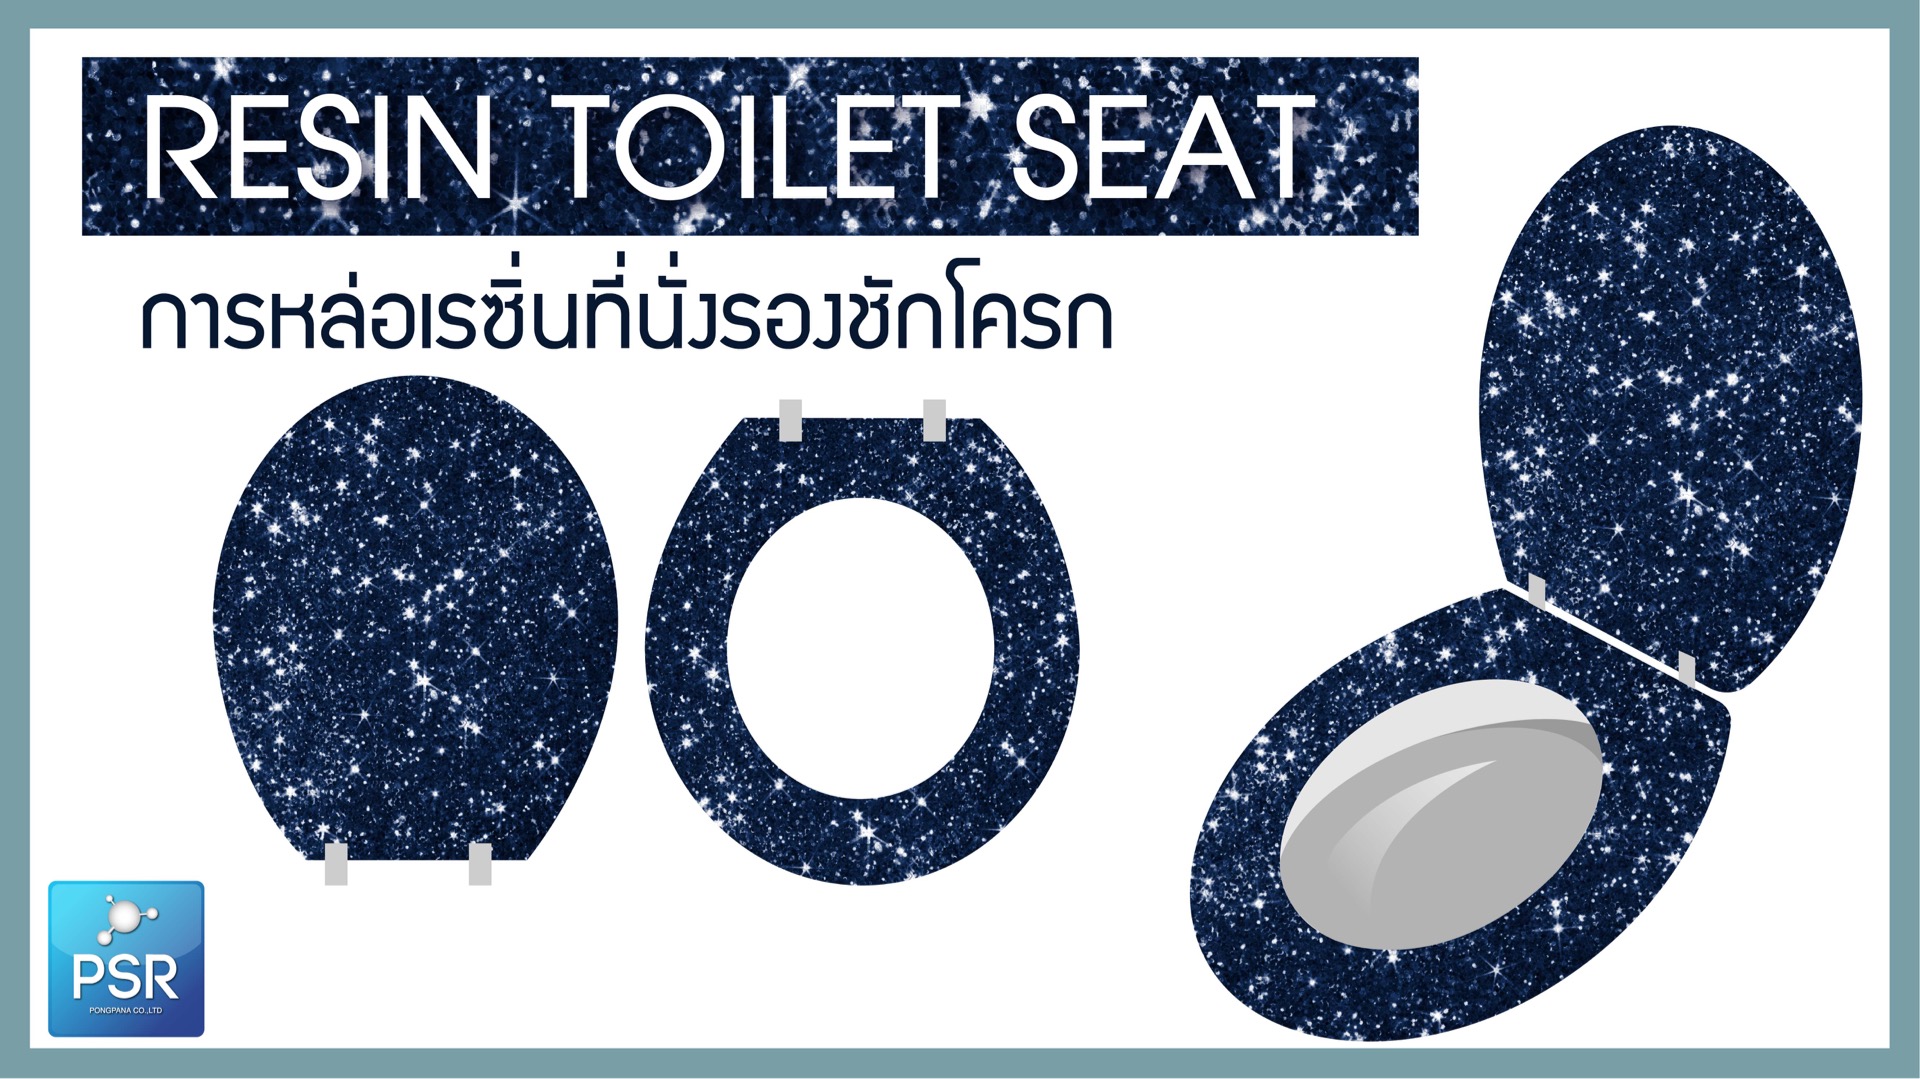 Resin toilet seat